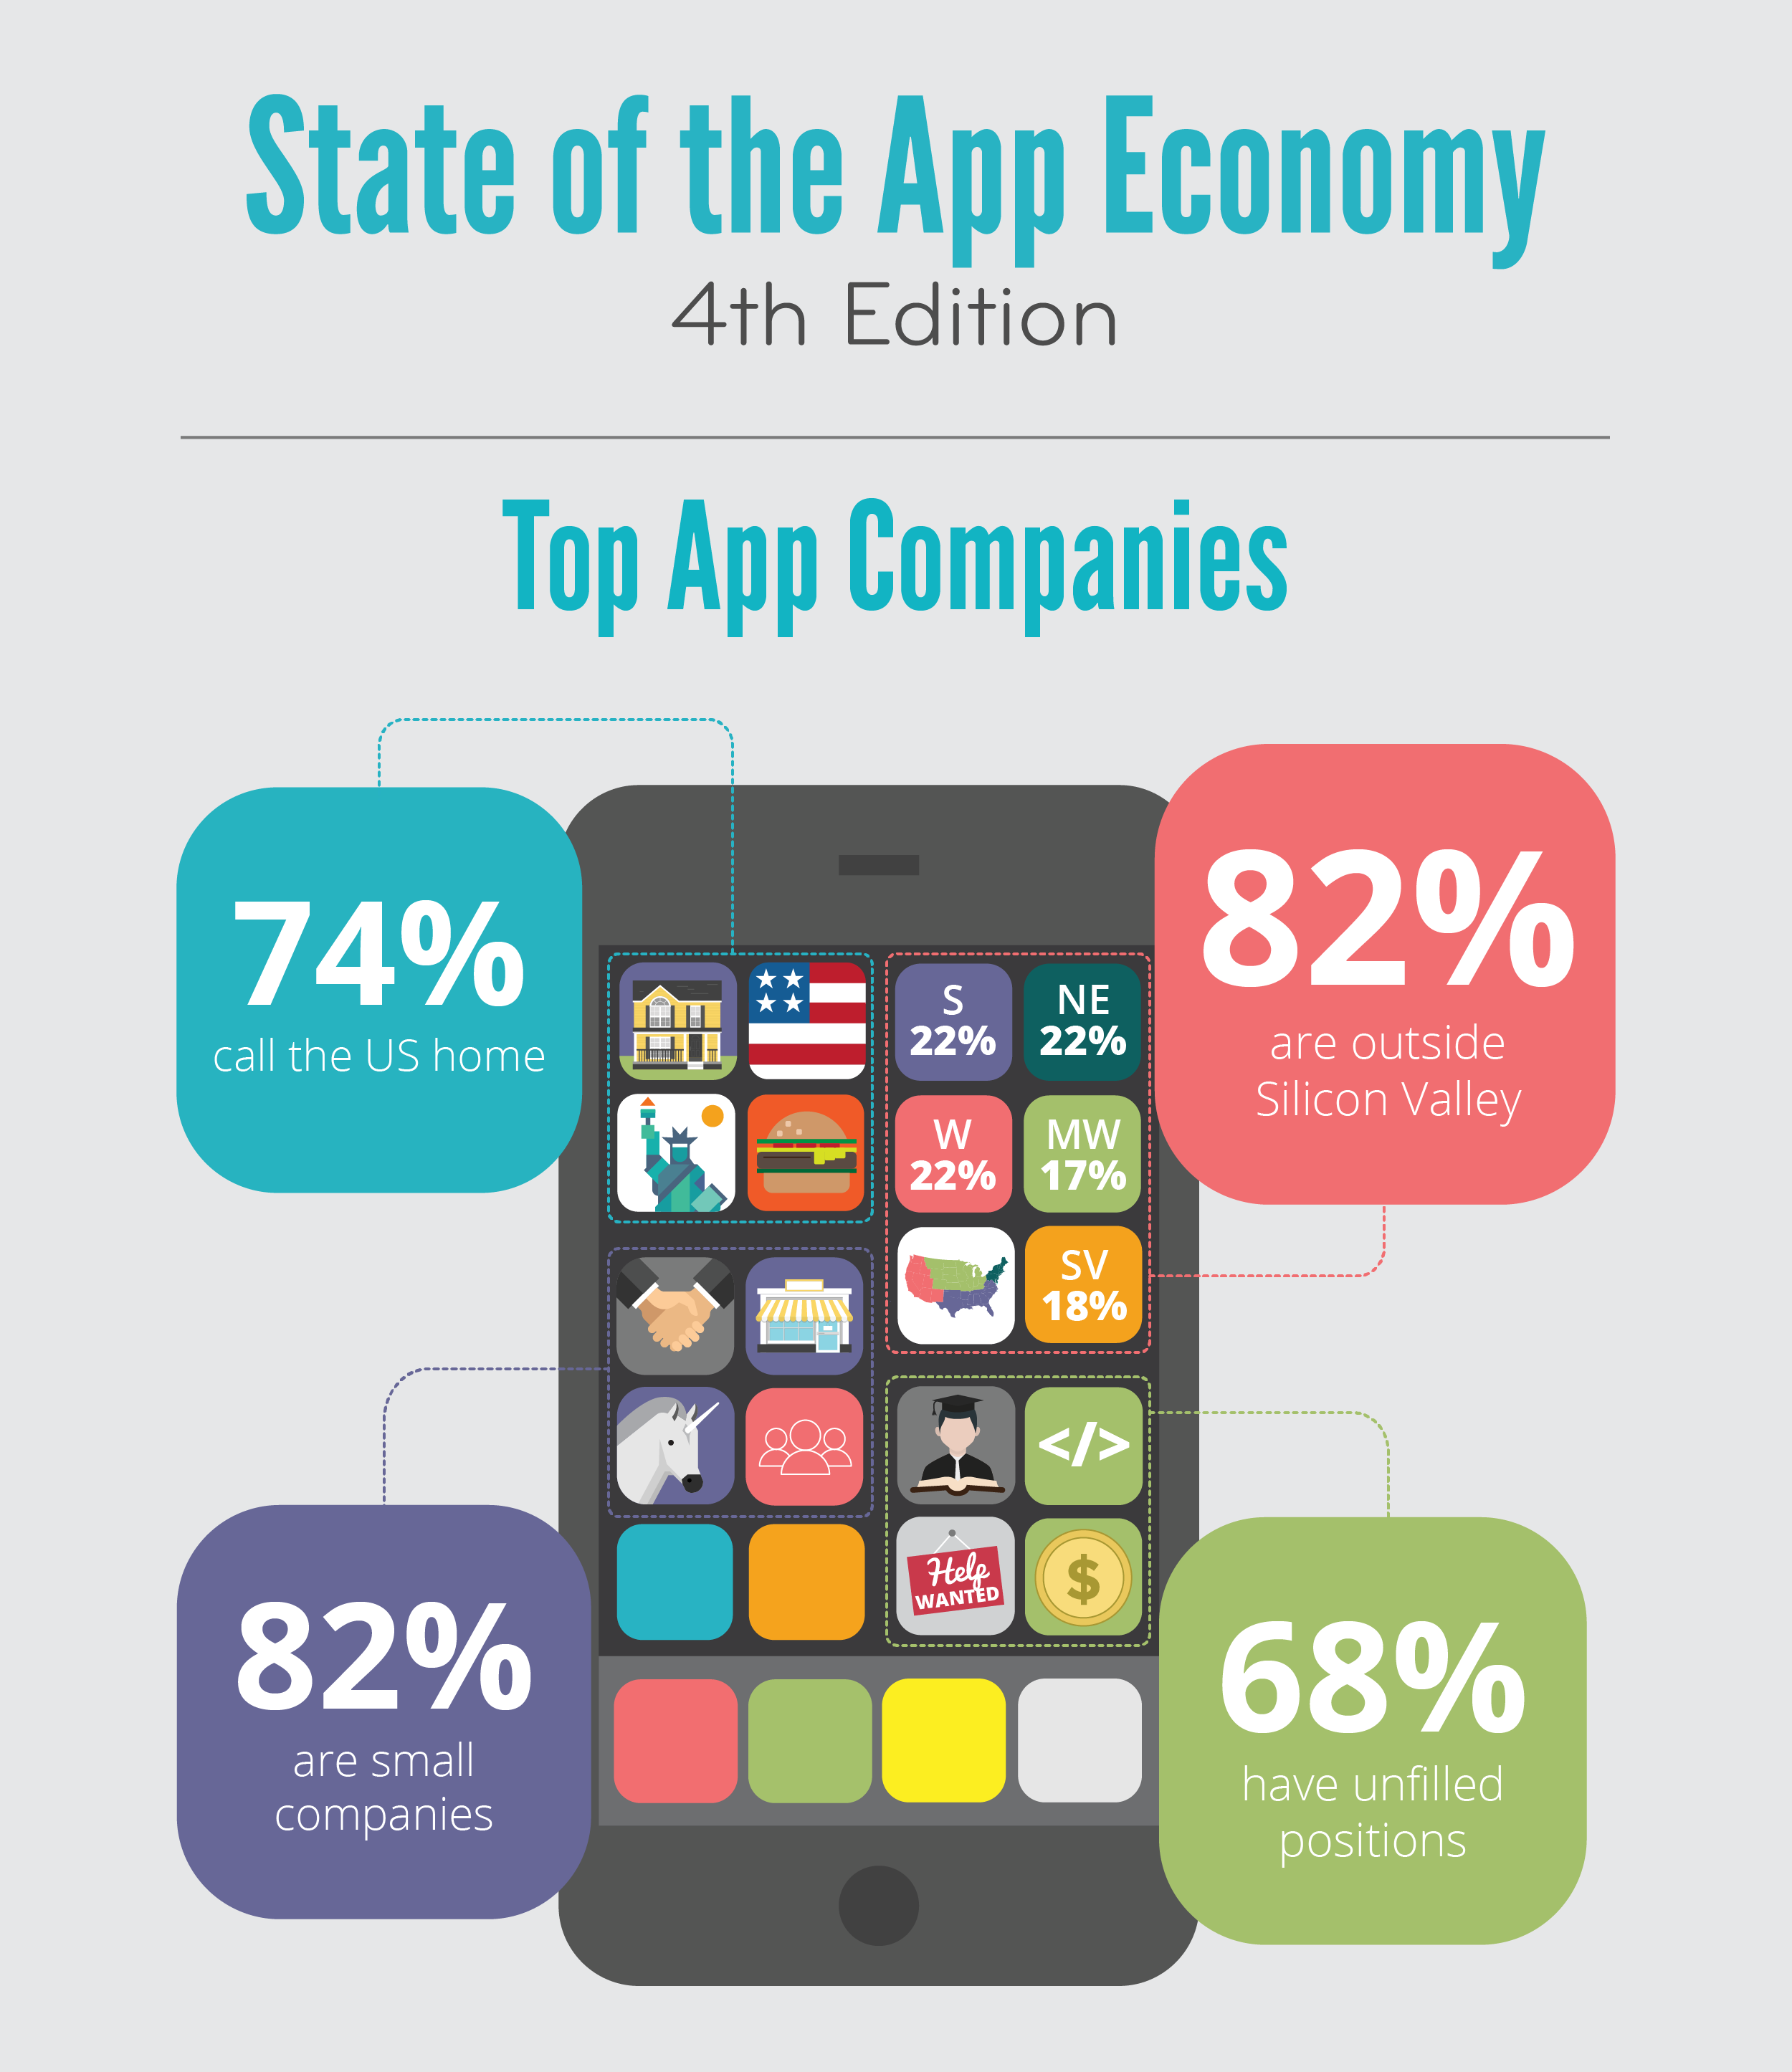 Top App Companies